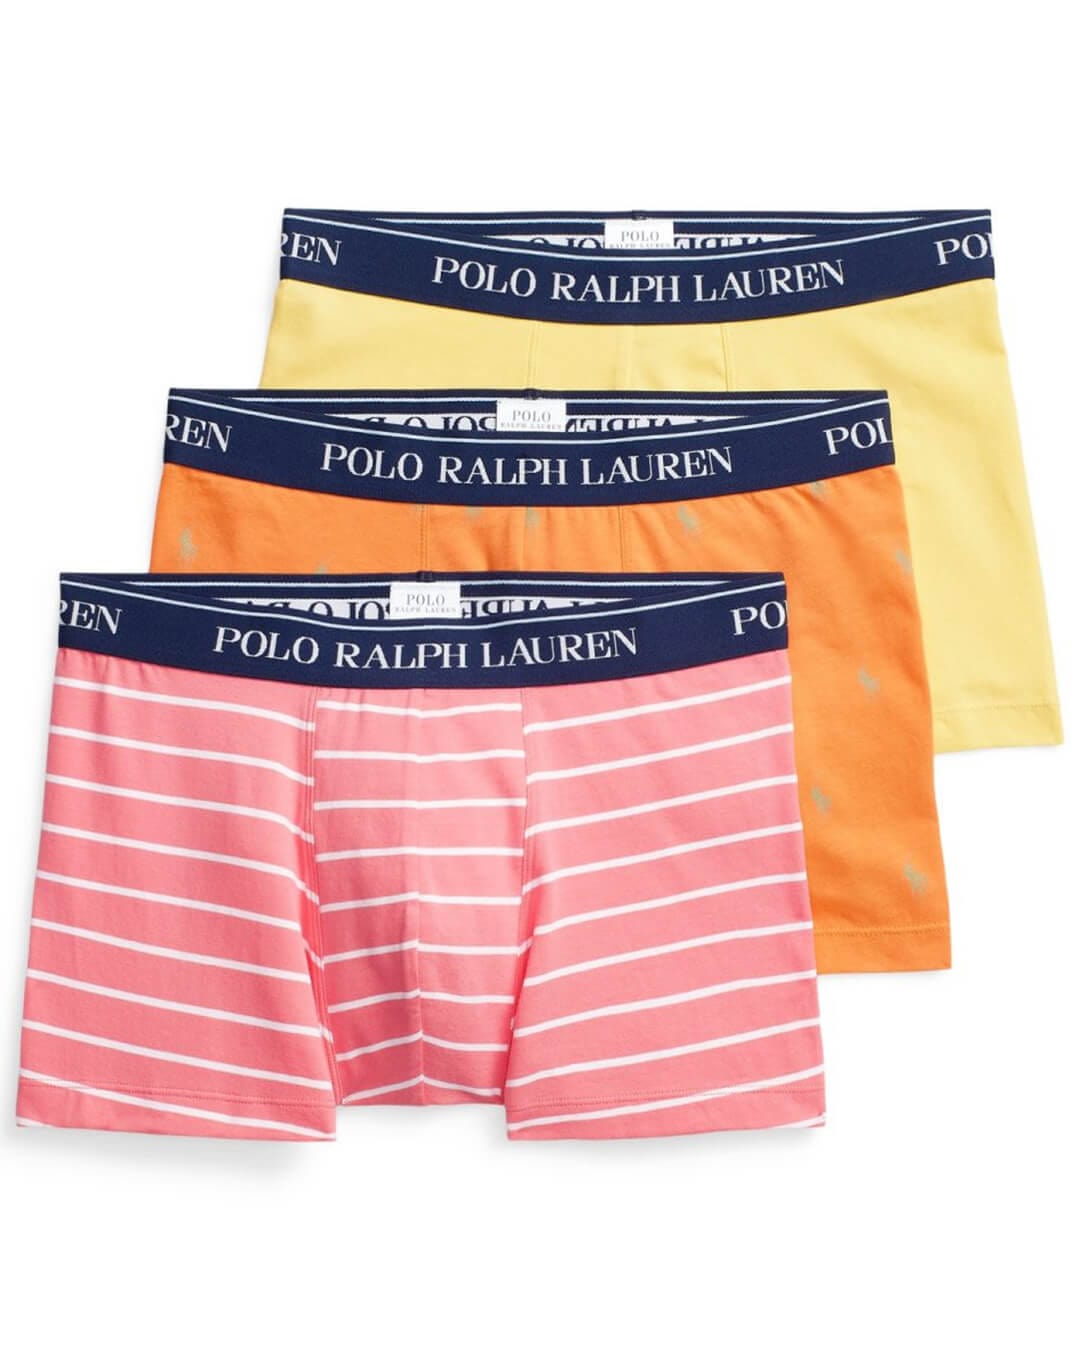 Polo Ralph Lauren Underwear Polo Ralph Lauren Yellow, Orange And Red Pastel Three-Pack Trunks